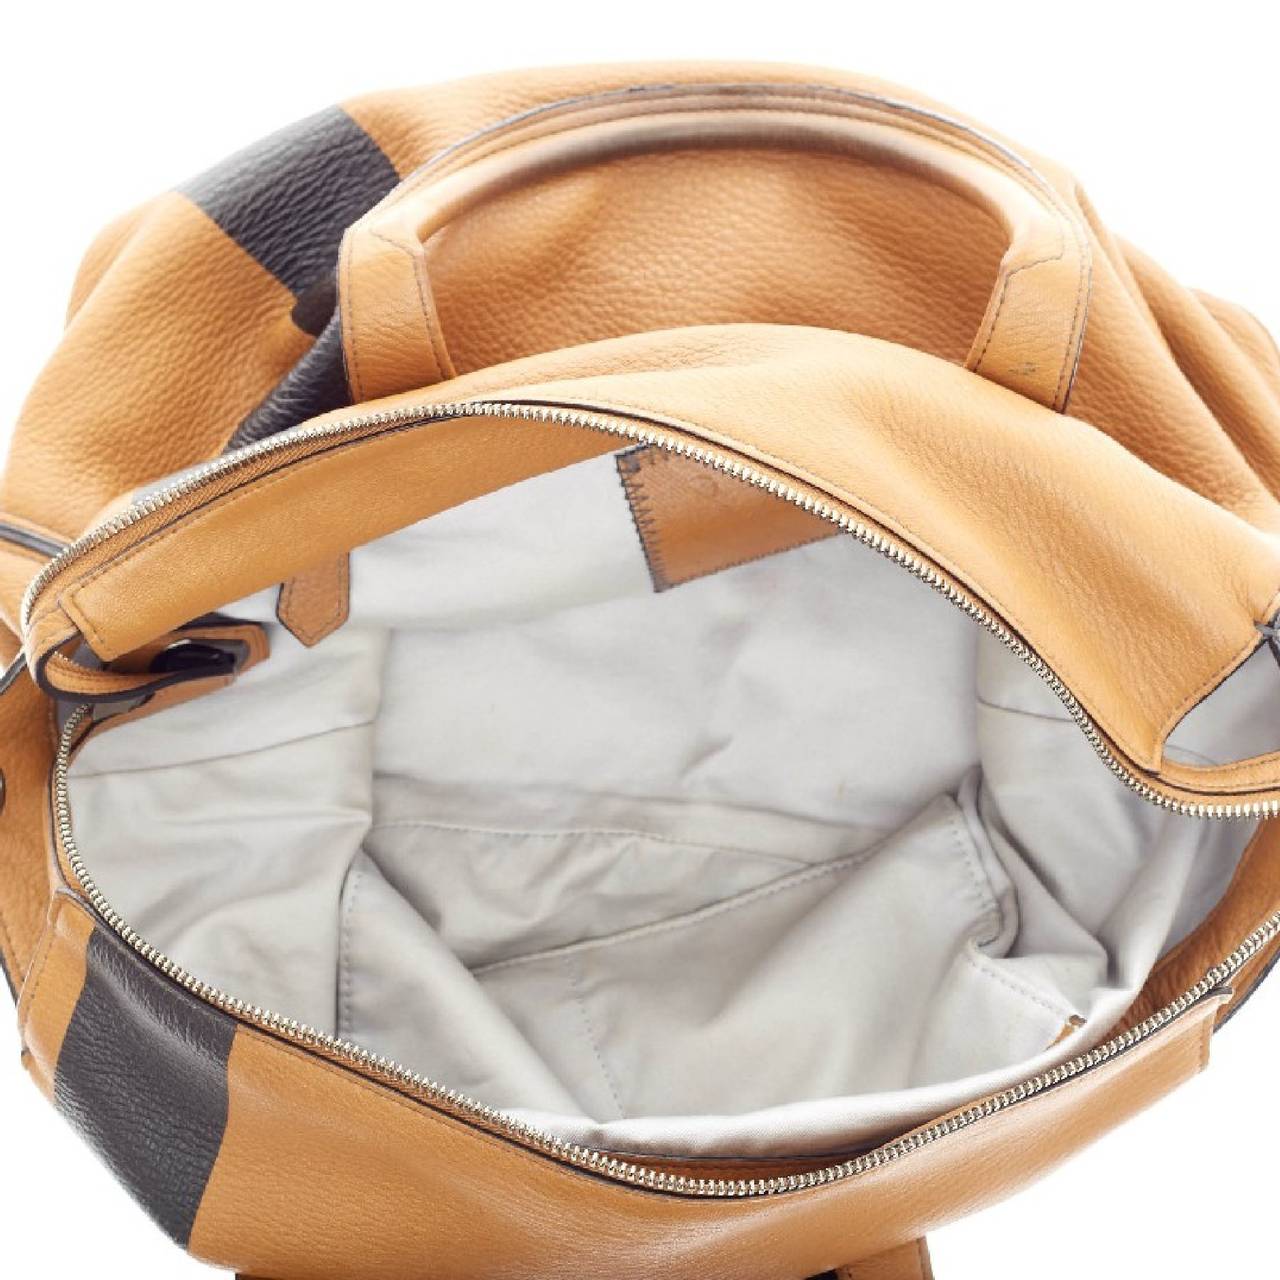 Reed Krakoff Striped Gym Bag Leather 4